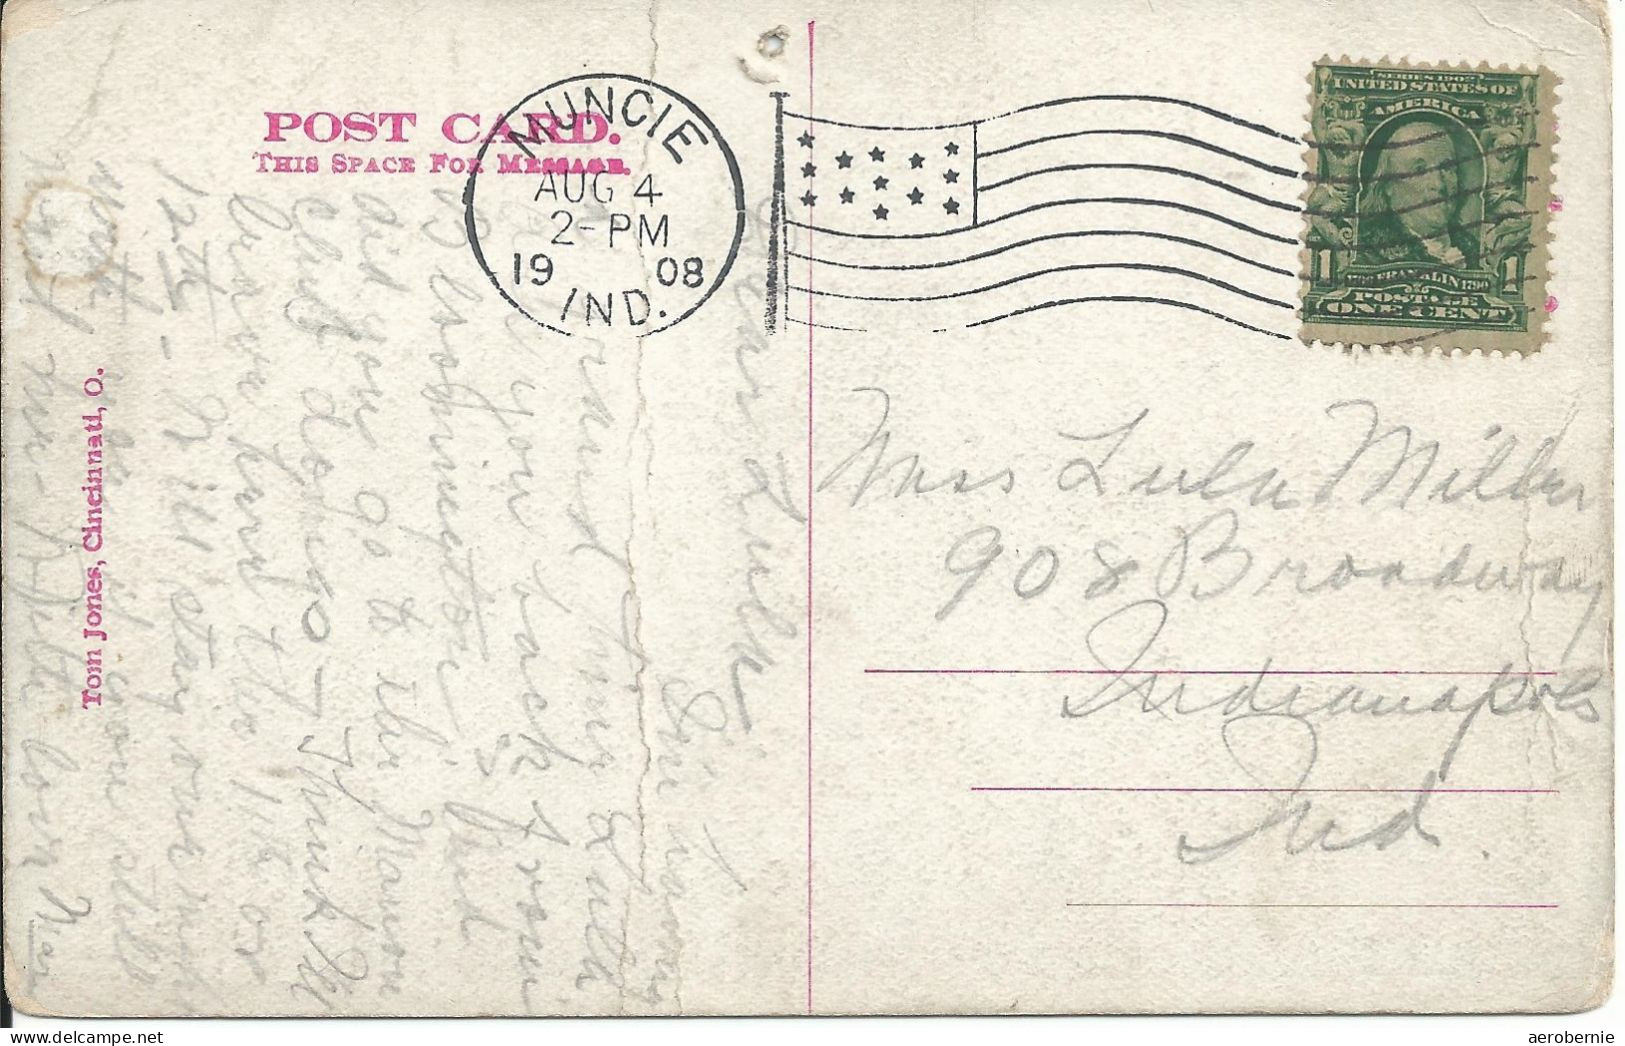 Alte Postkarte UNION STATION, Muncie/Indiana (1908) - Stazioni Senza Treni